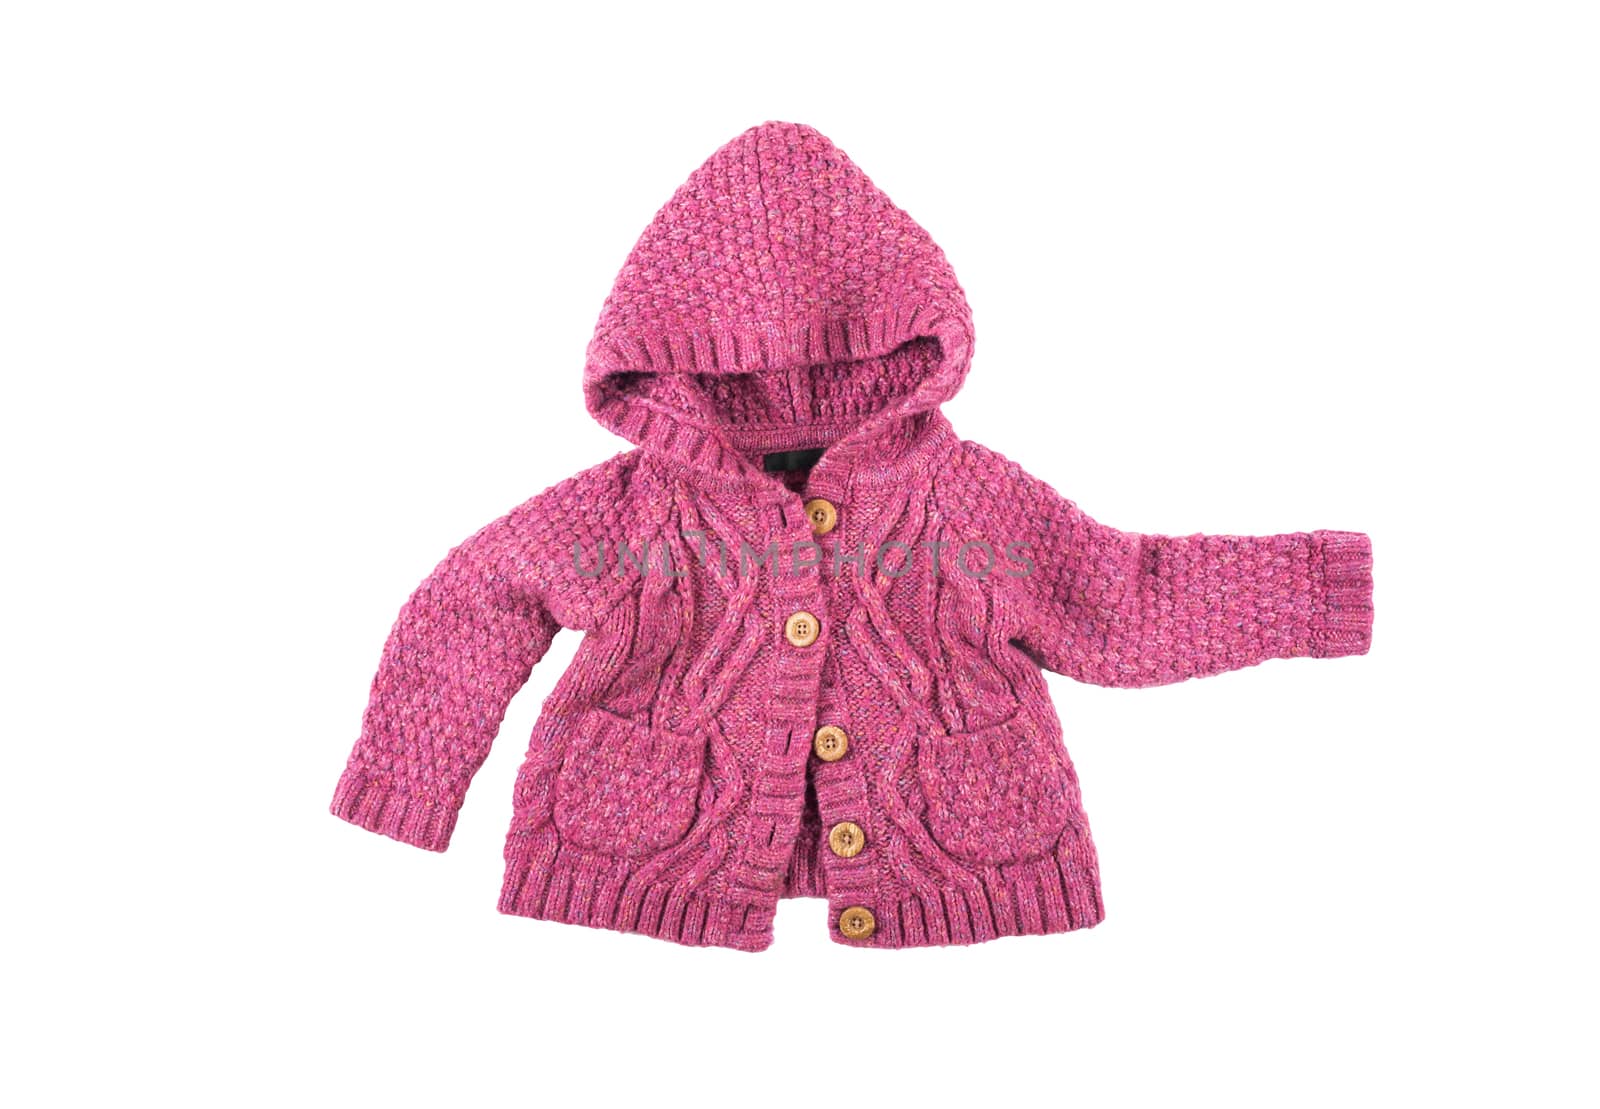 pink sweater by iprachenko